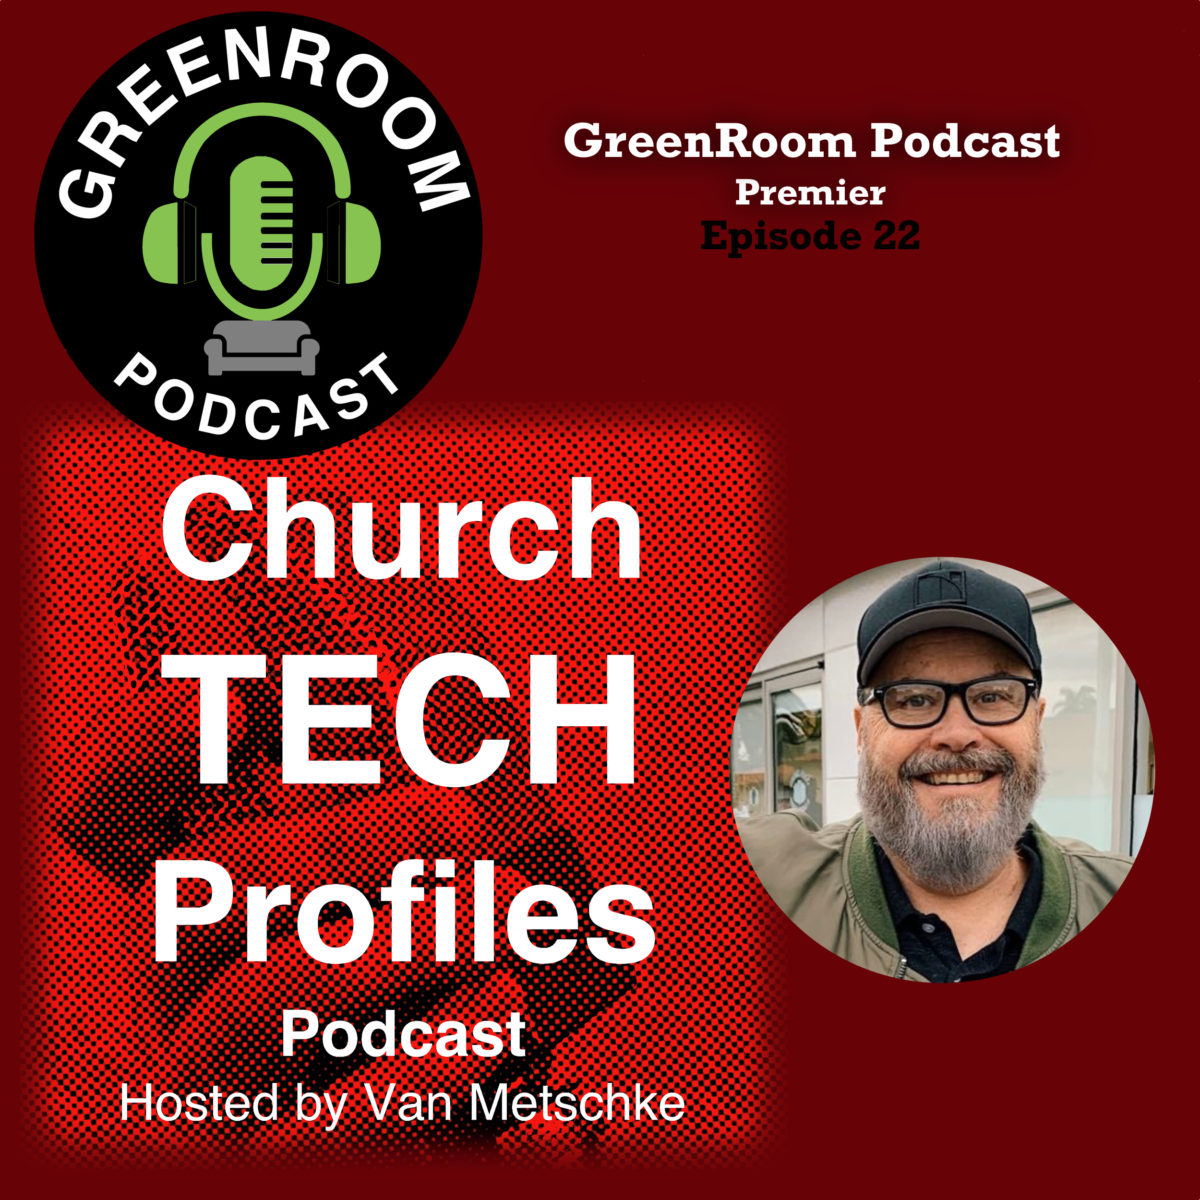 ChurchTechProfiles Episode 22: GreenRoom Podcast